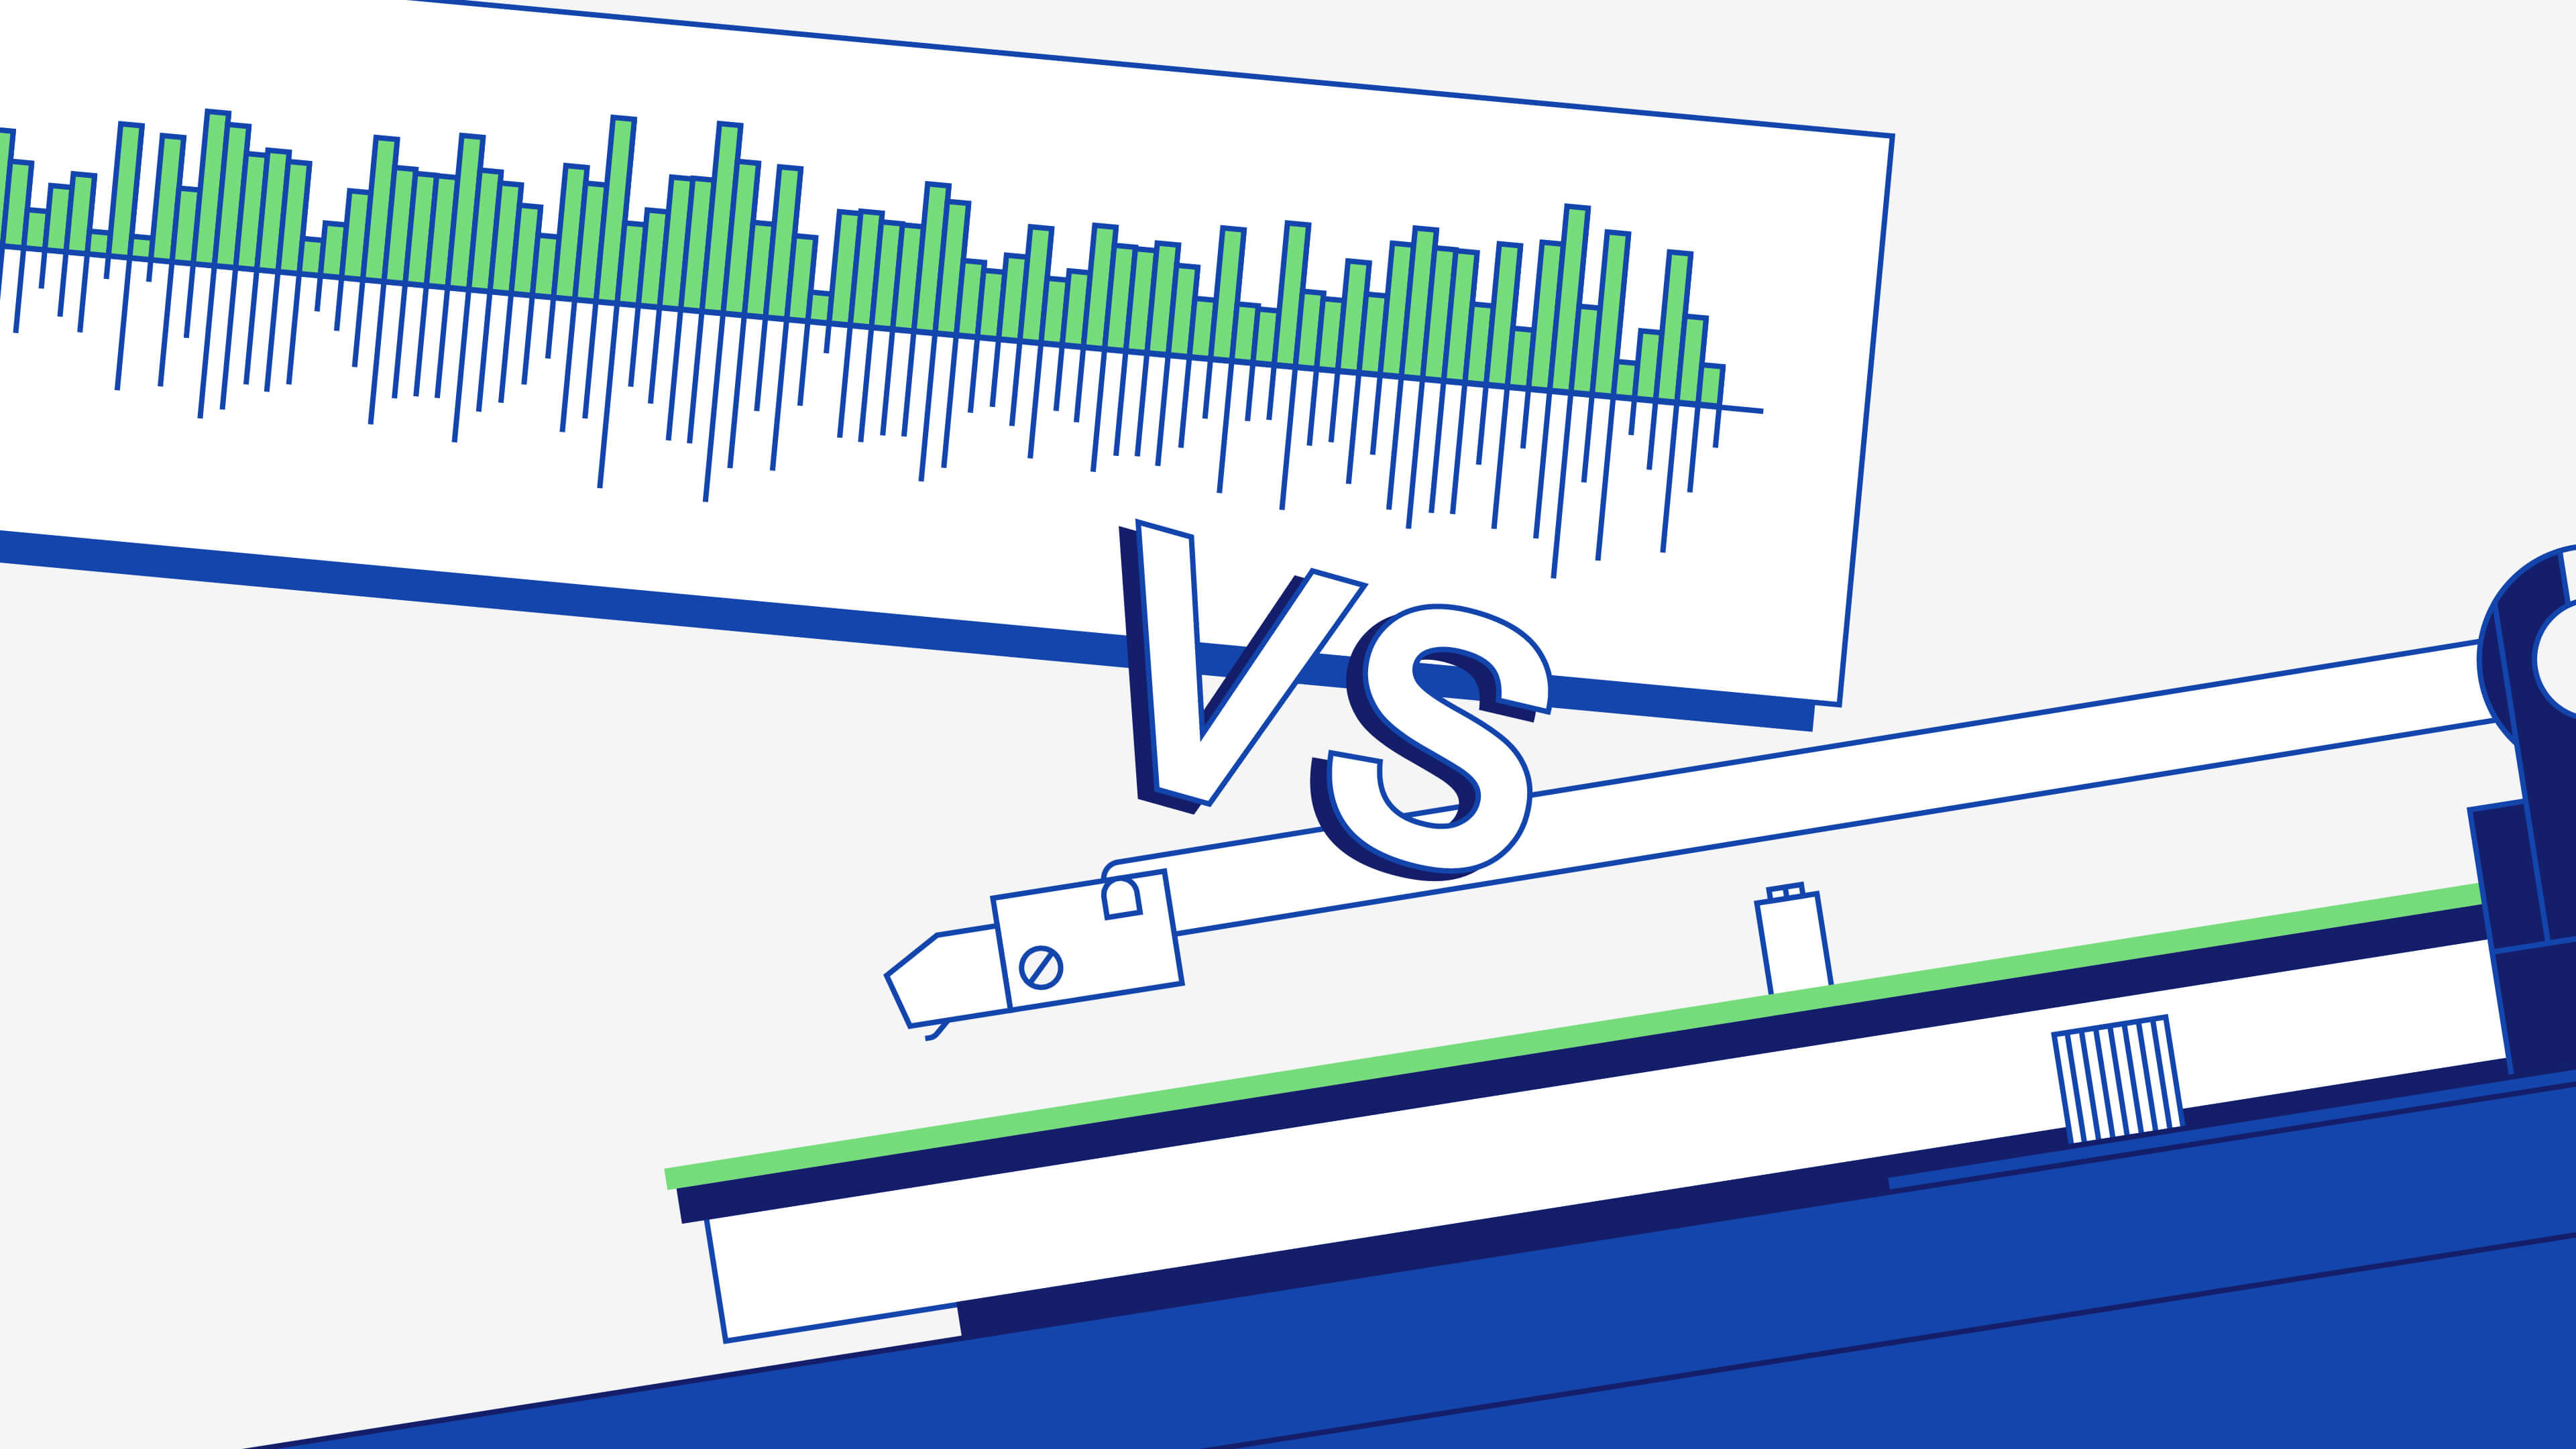 Digital vs analog: is analog music better than digital?